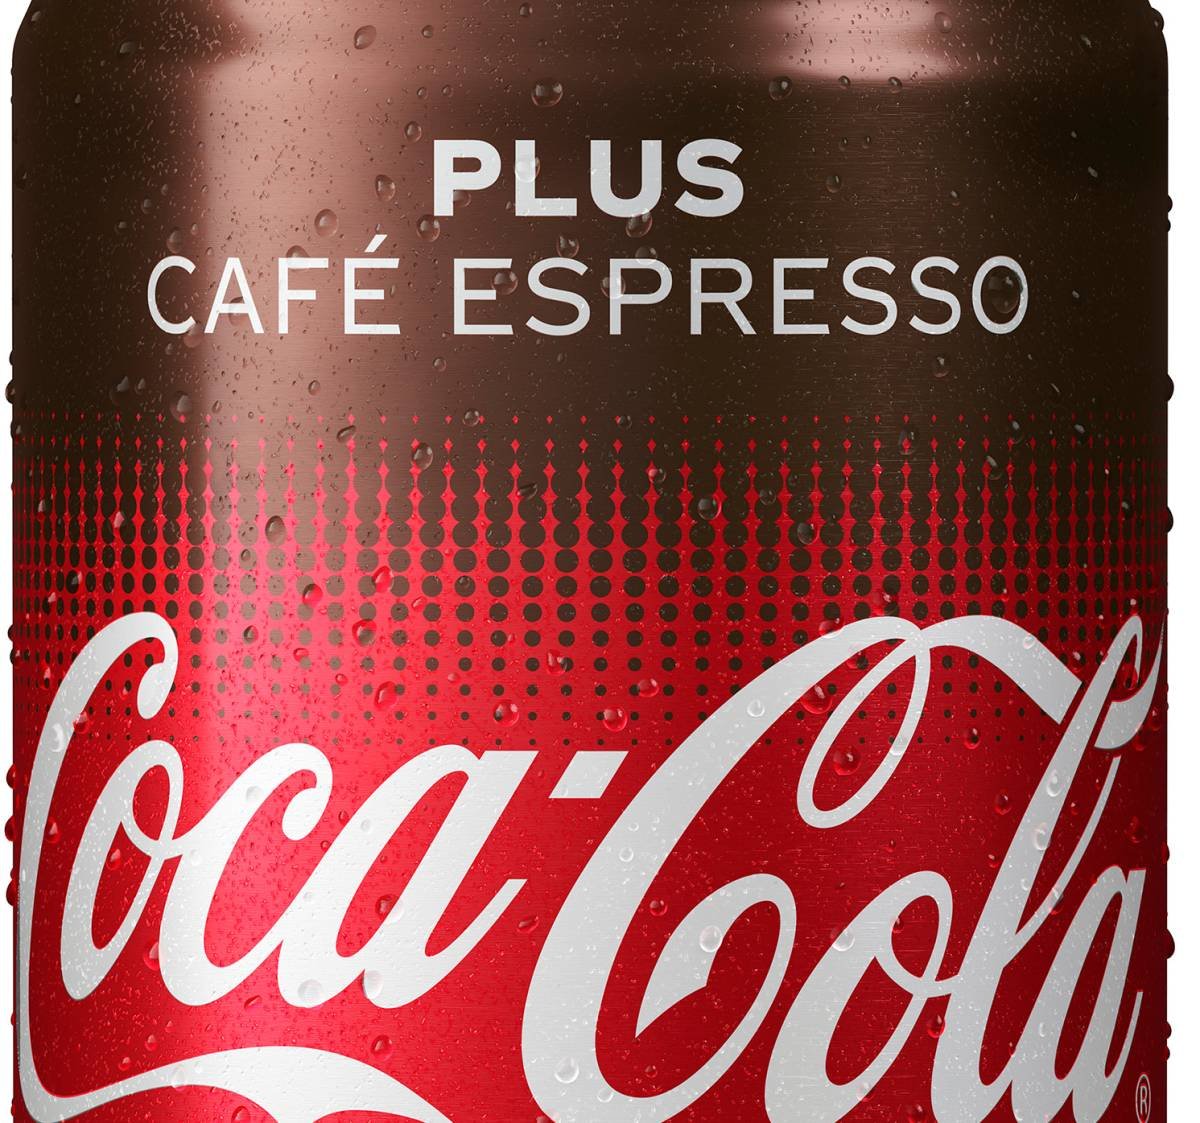 Coca-Cola Plus Cafe Expres 220Ml